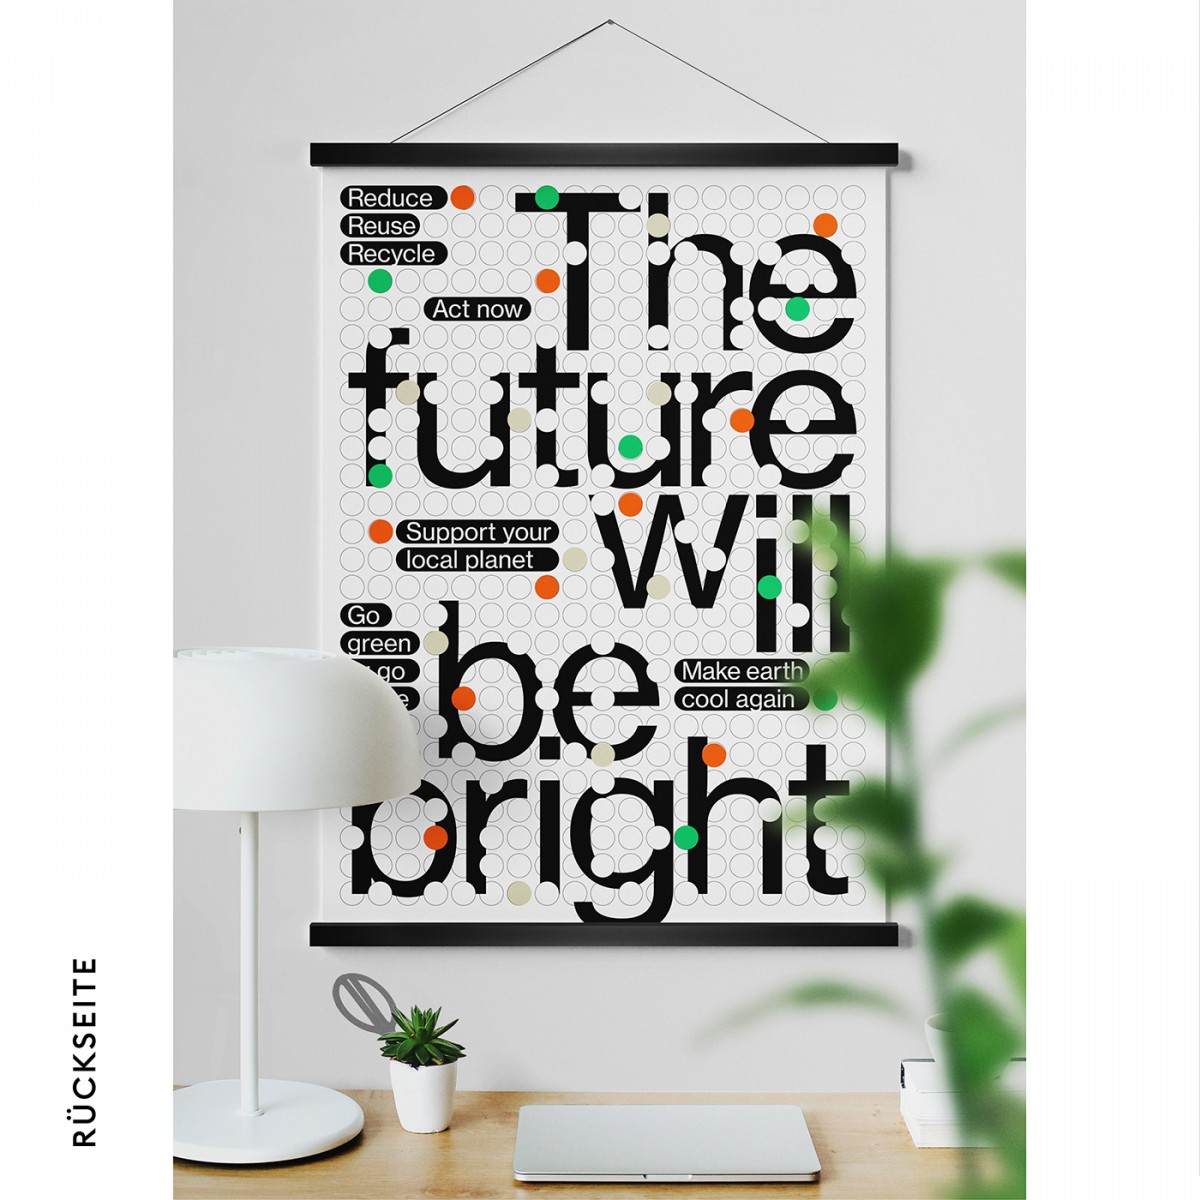 NEW PRINTS ON THE BLOCK / Jahresplaner & Plakat mit Klebepunkten »The future will be bright«